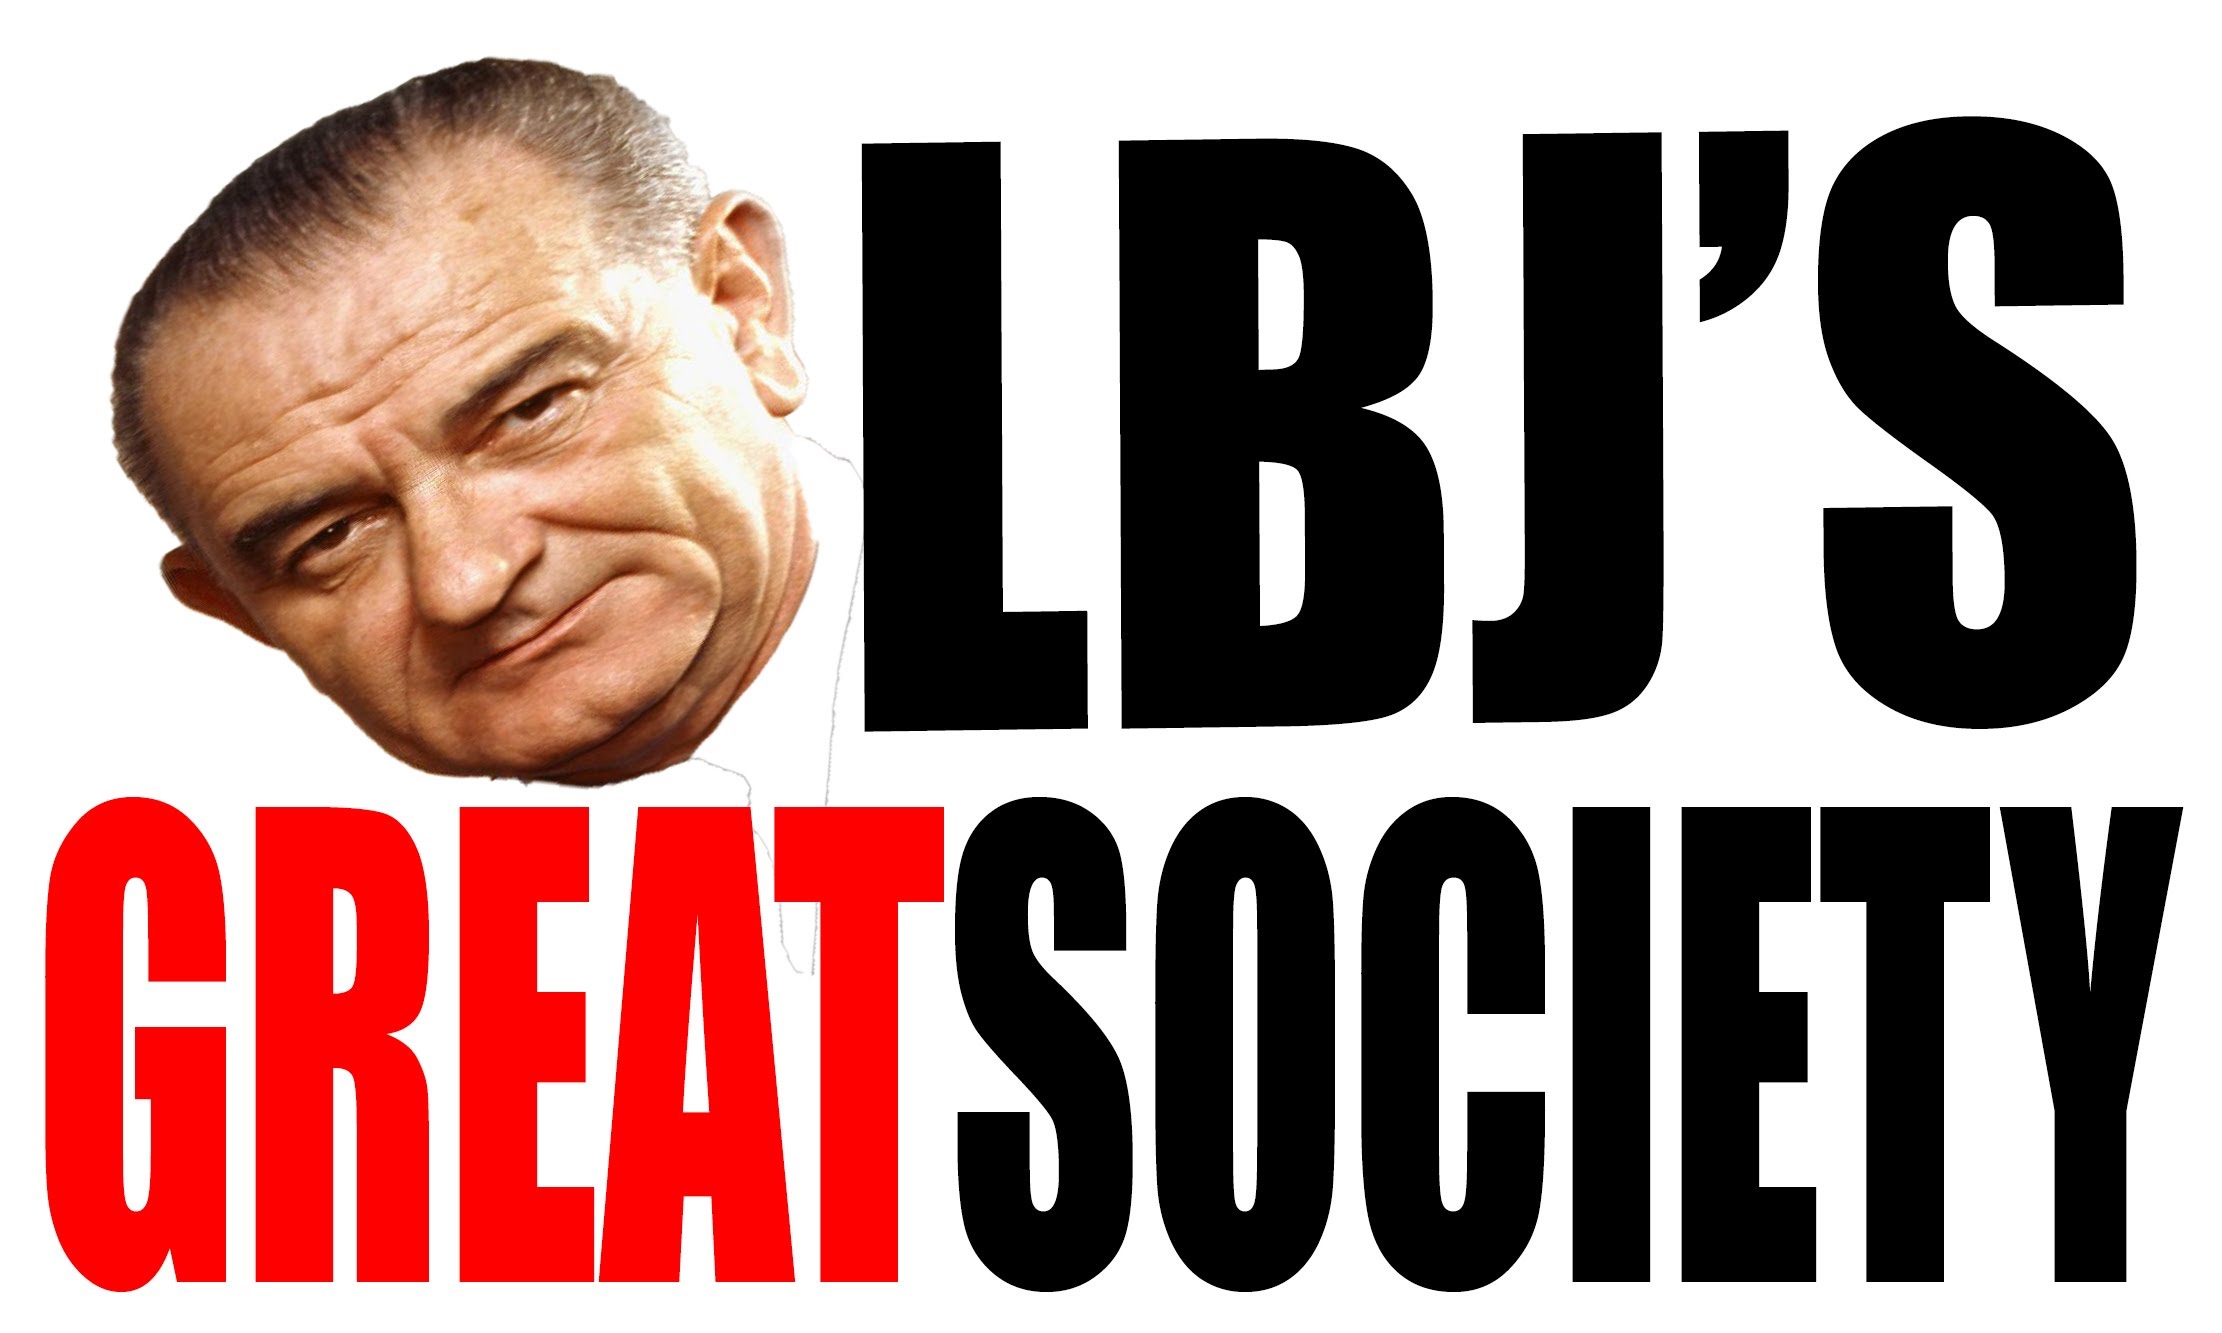 The greatest society